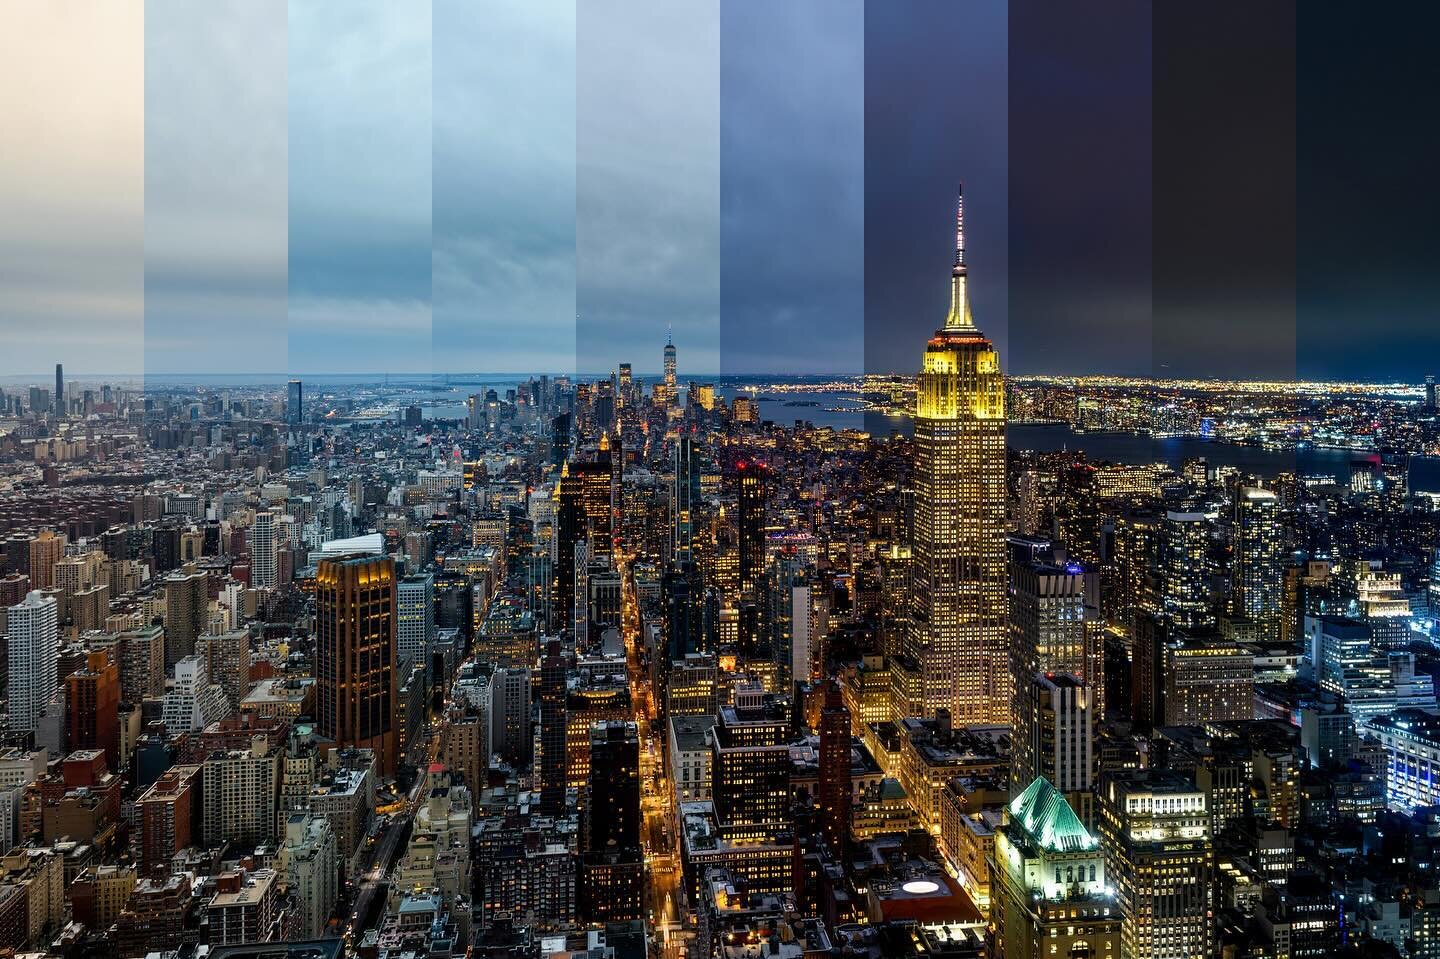 Cloudy sunset 🌆 
#NewYorkCity #WhatsGoodNYC #VisitNYC #NYCTourism #NYCorNowhere⁠ #ILoveNY
#YourShotPhotographer #TLPicks